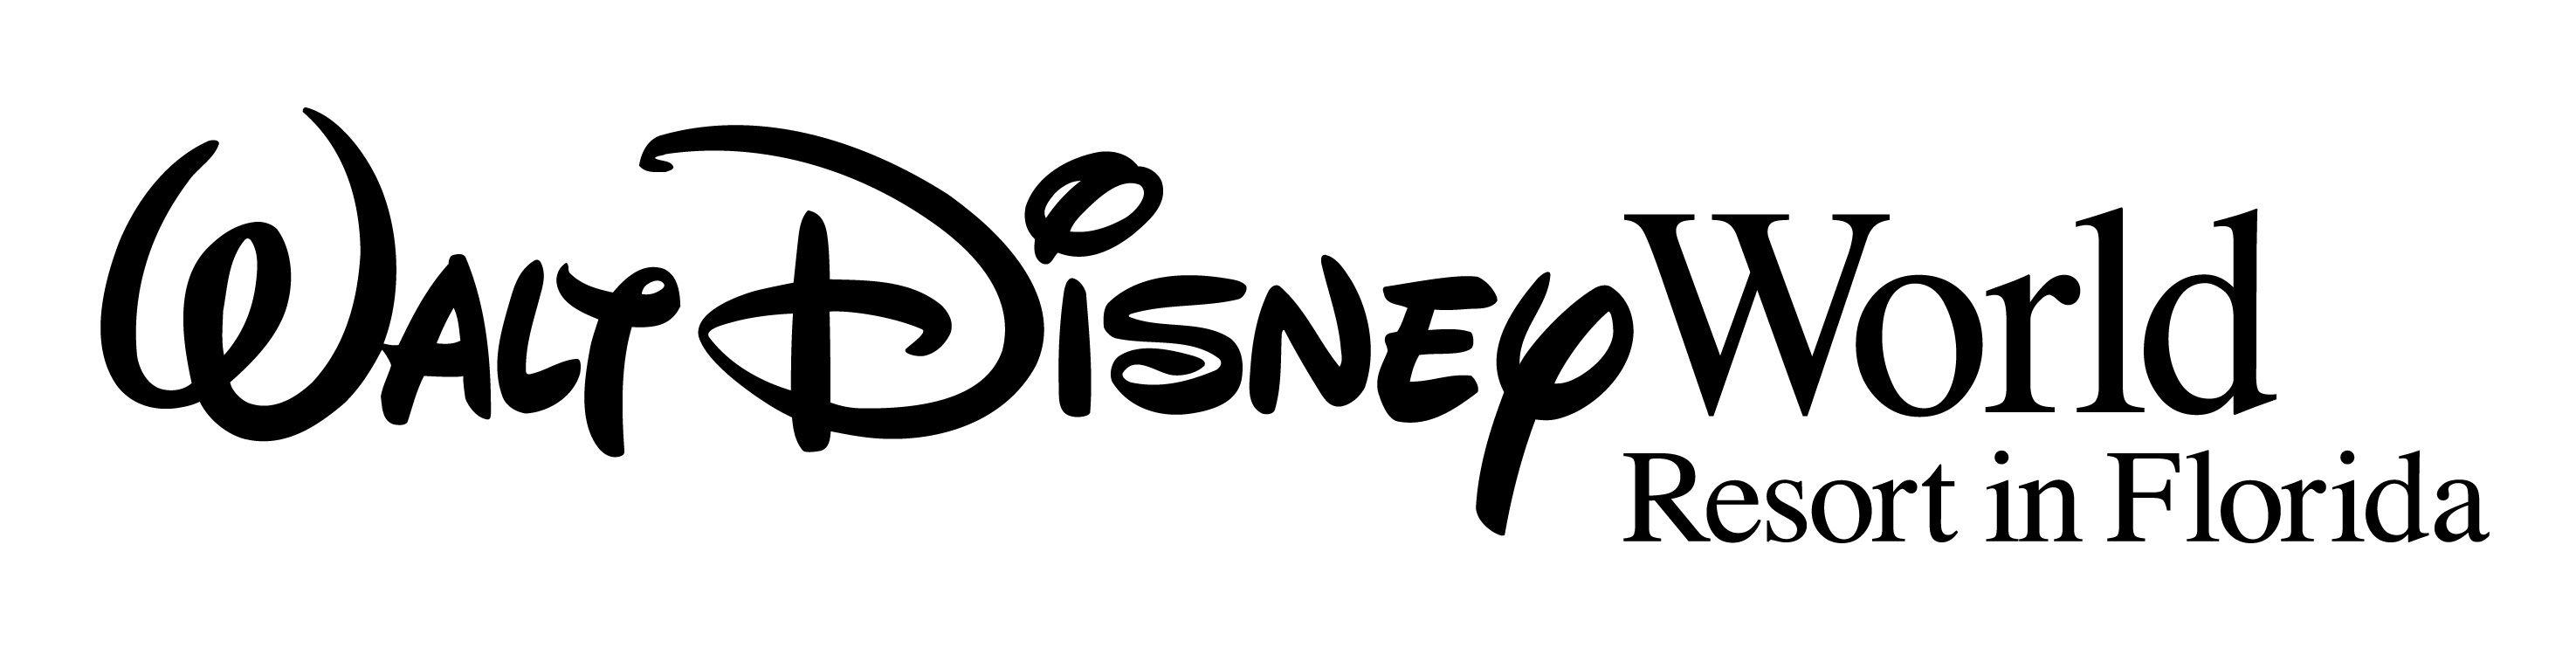 Disney World Orlando Logo - Walt Disney World Resort in Florida